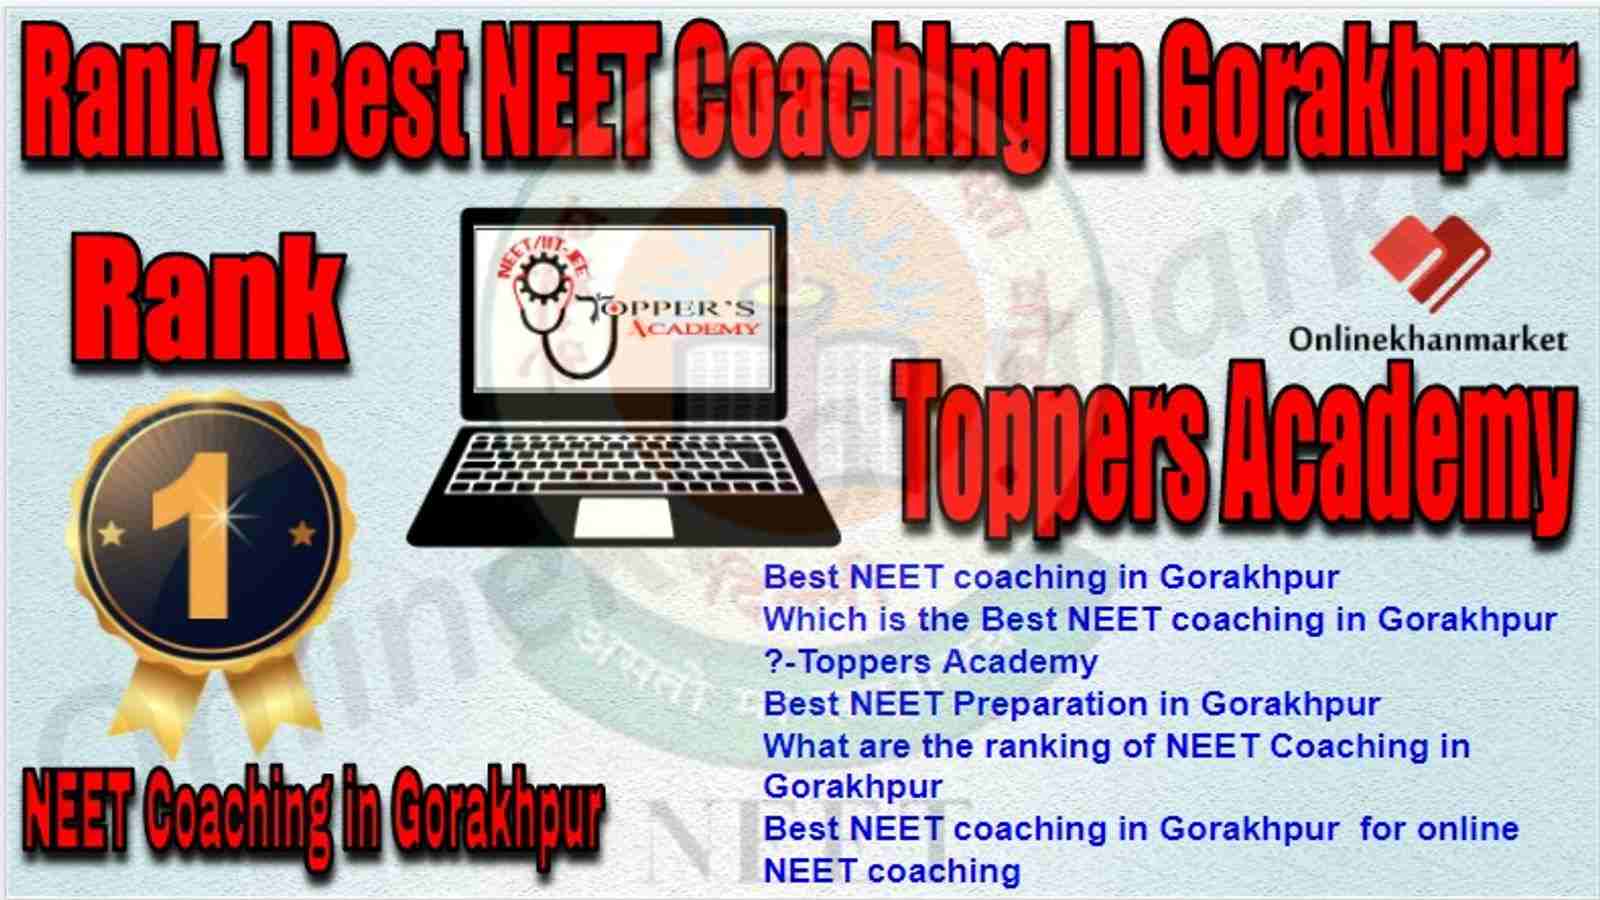 Rank 1 Best NEET Coaching Gorakhpur